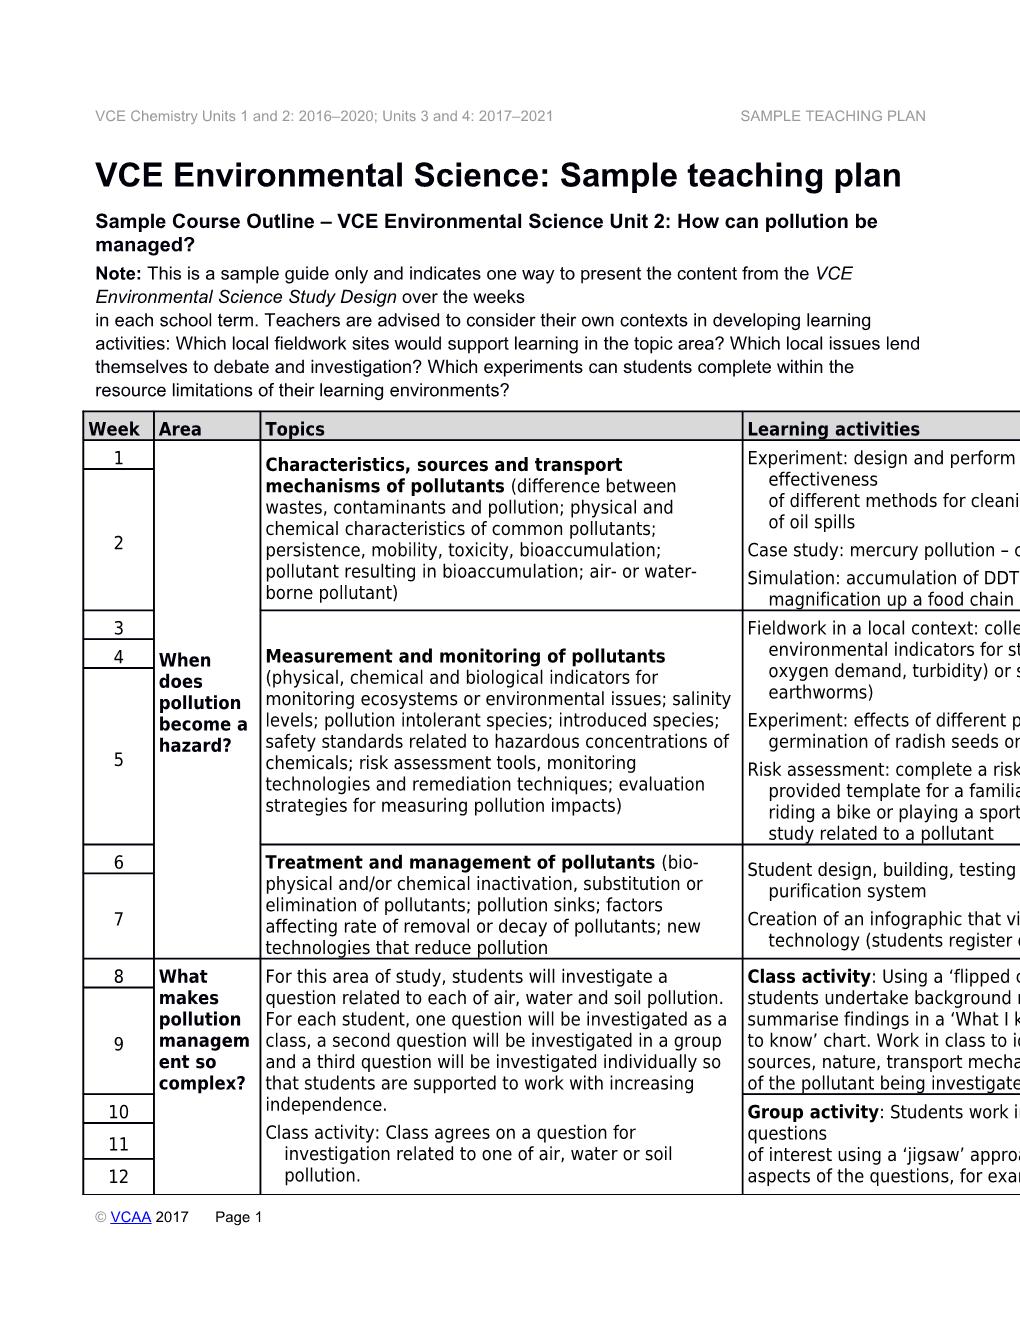 VCE Environmental Science: Sample Teaching Plan